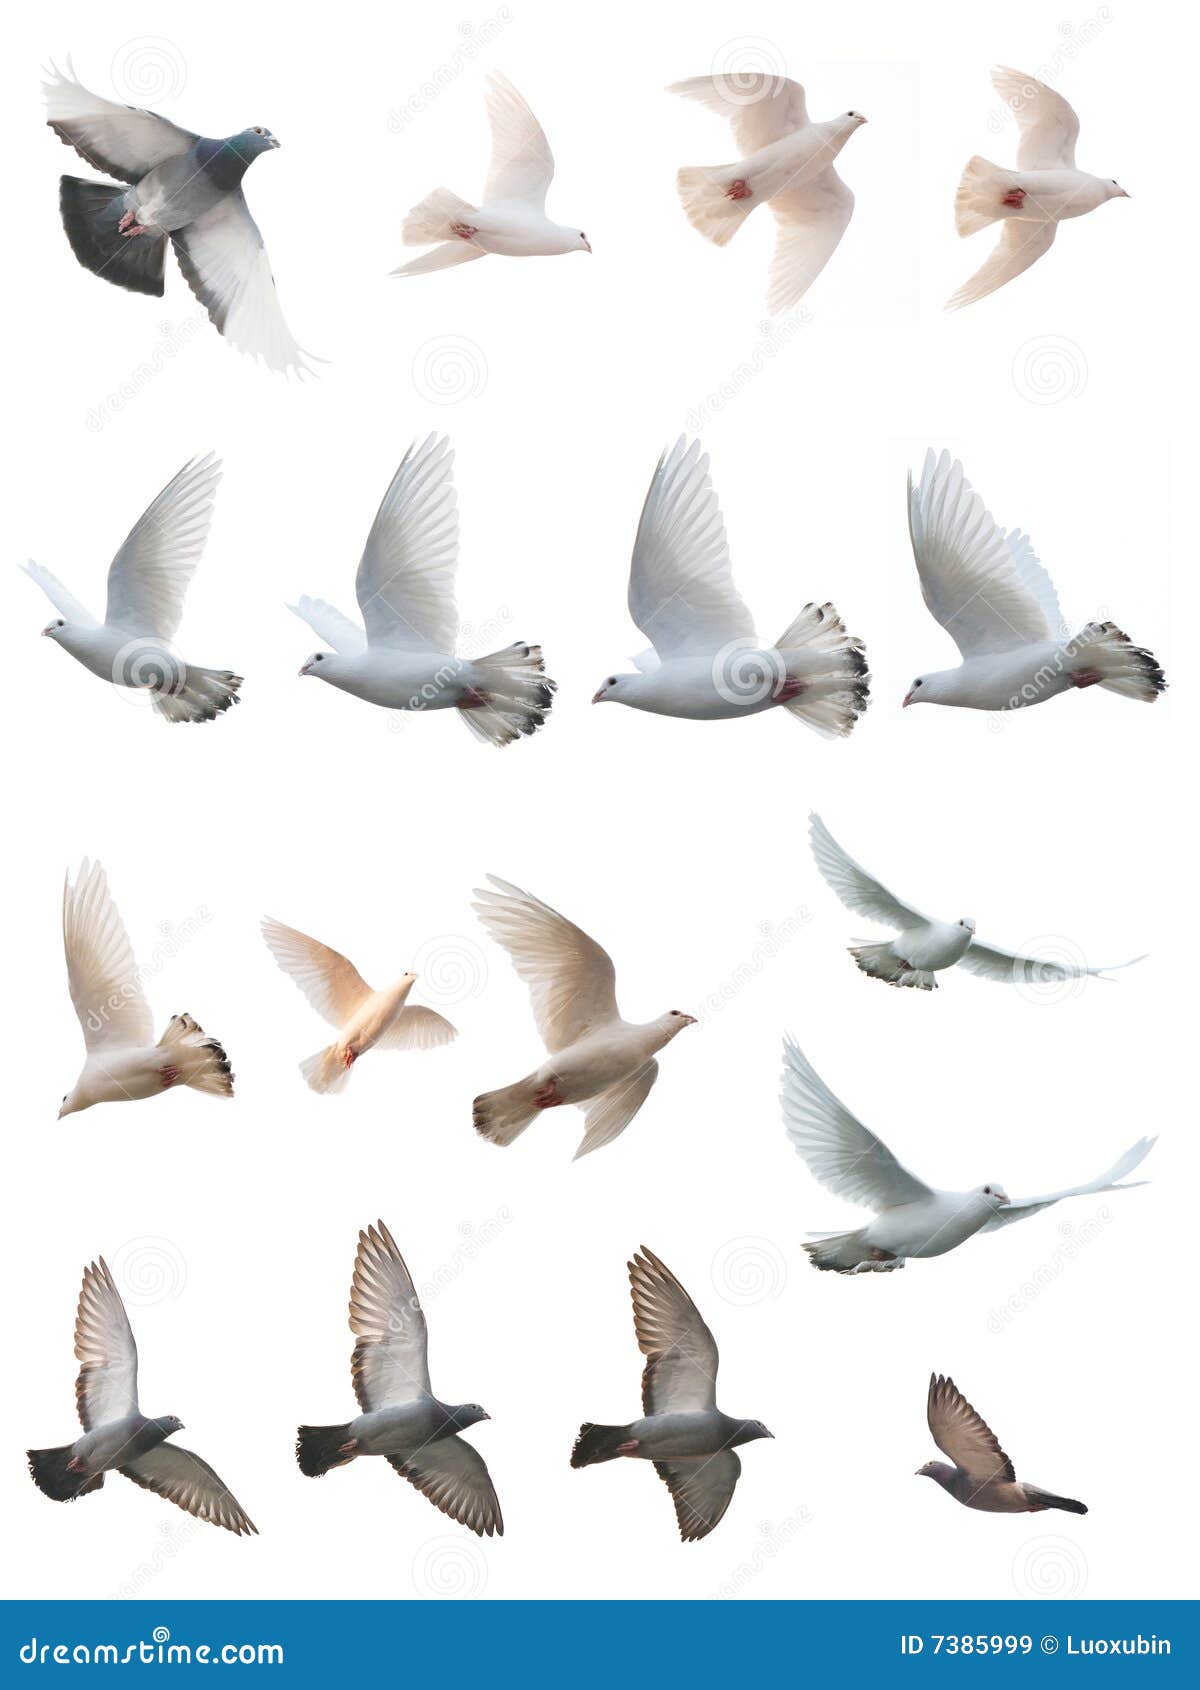 the posture of pigeon flight